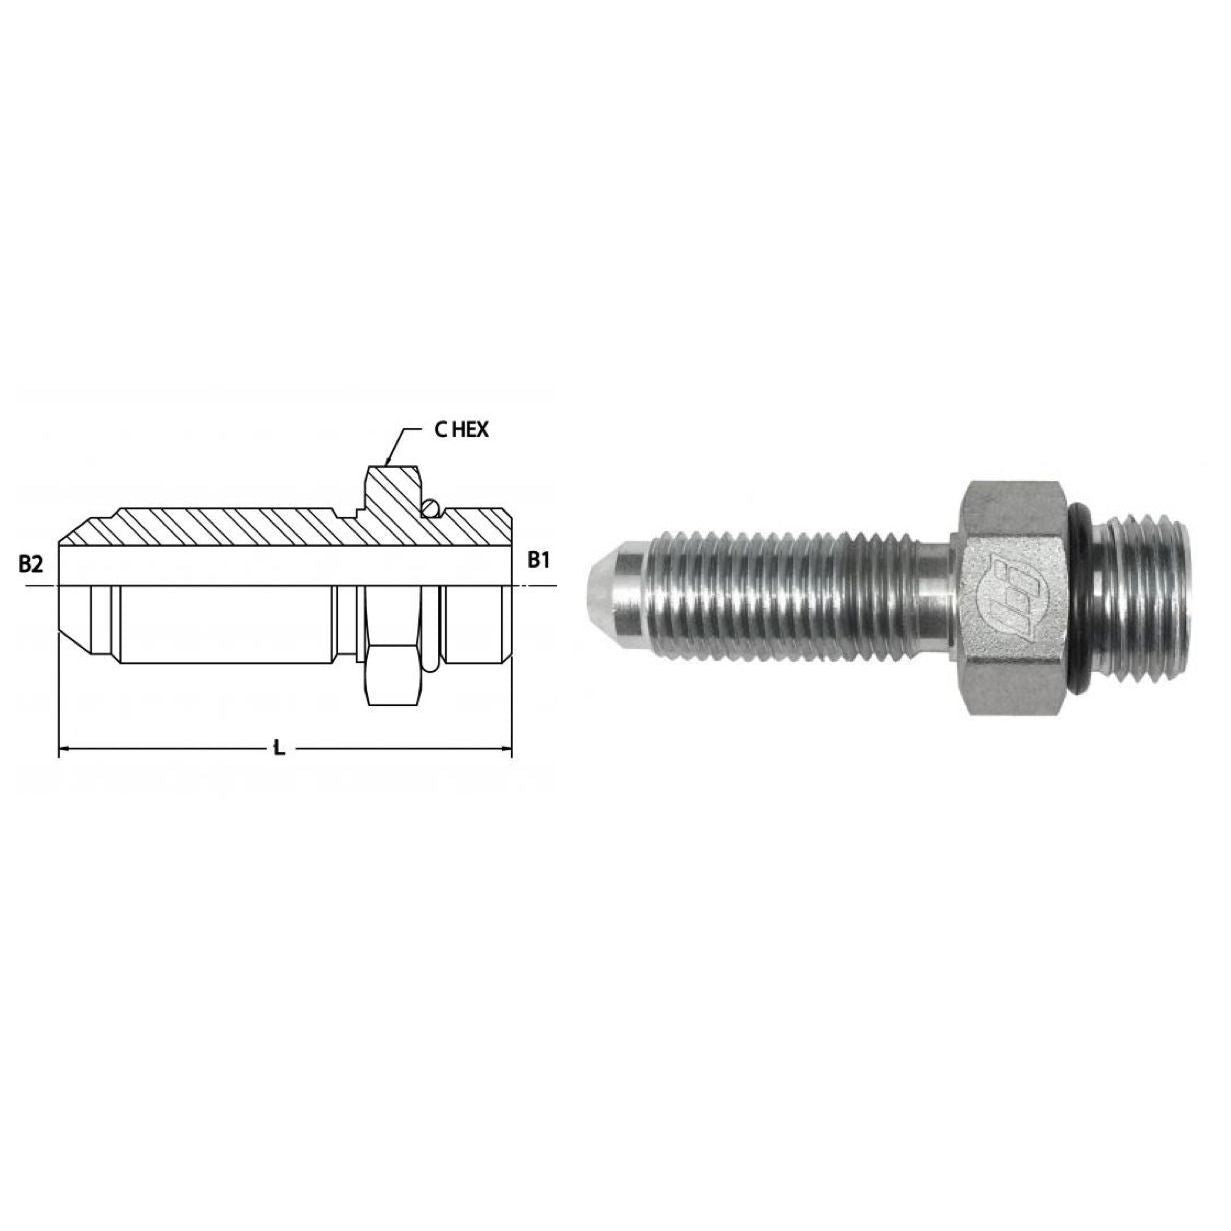 2764-04-04-O : OneHydraulics Bulkhead Straight Adapter, 0.25 (1/4) Male ORB x 0.25 (1/4) Male JIC, Steel, 7500psi